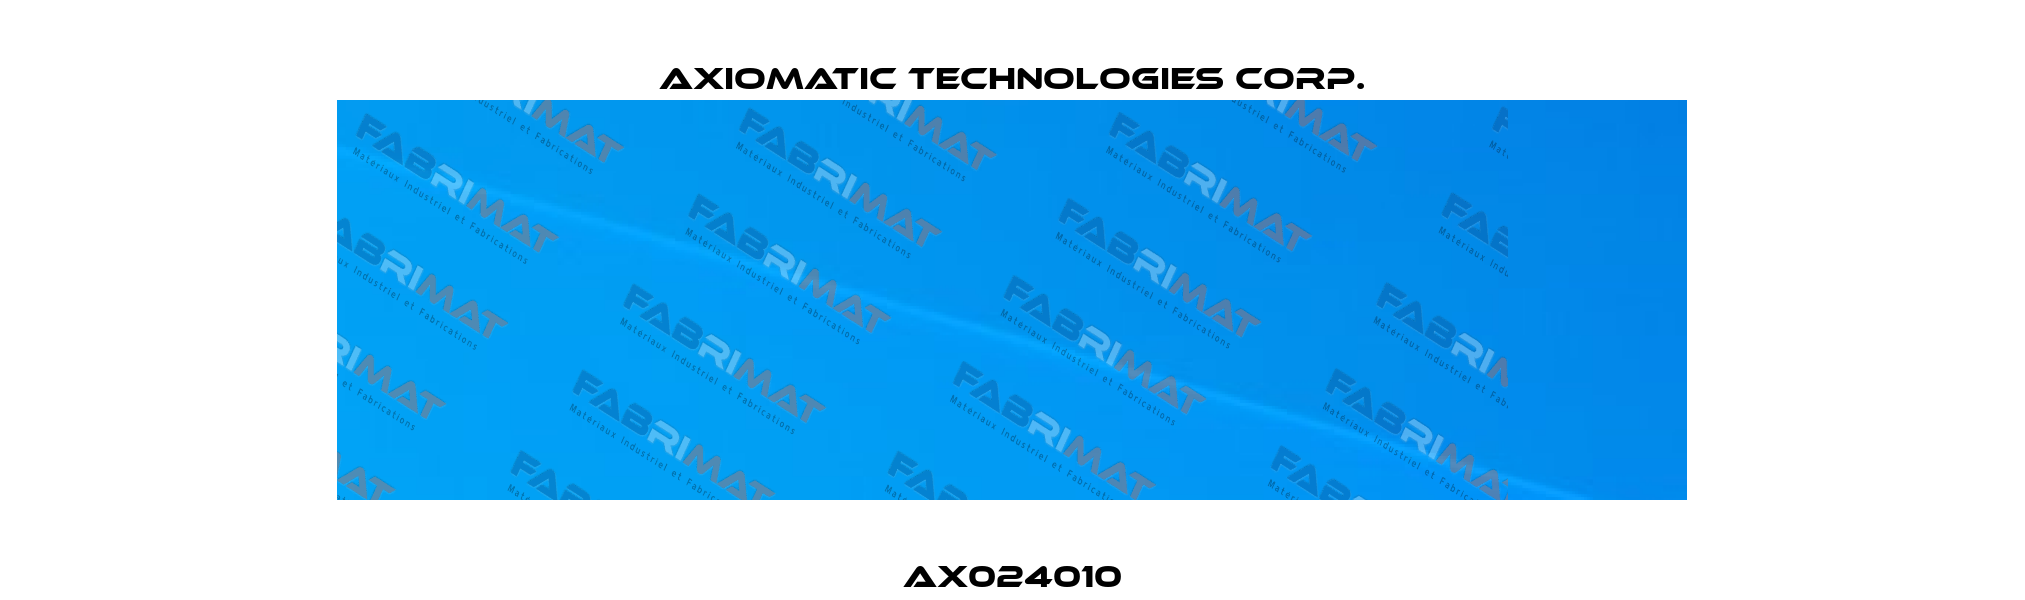 AX024010 Axiomatic Technologies Corp.